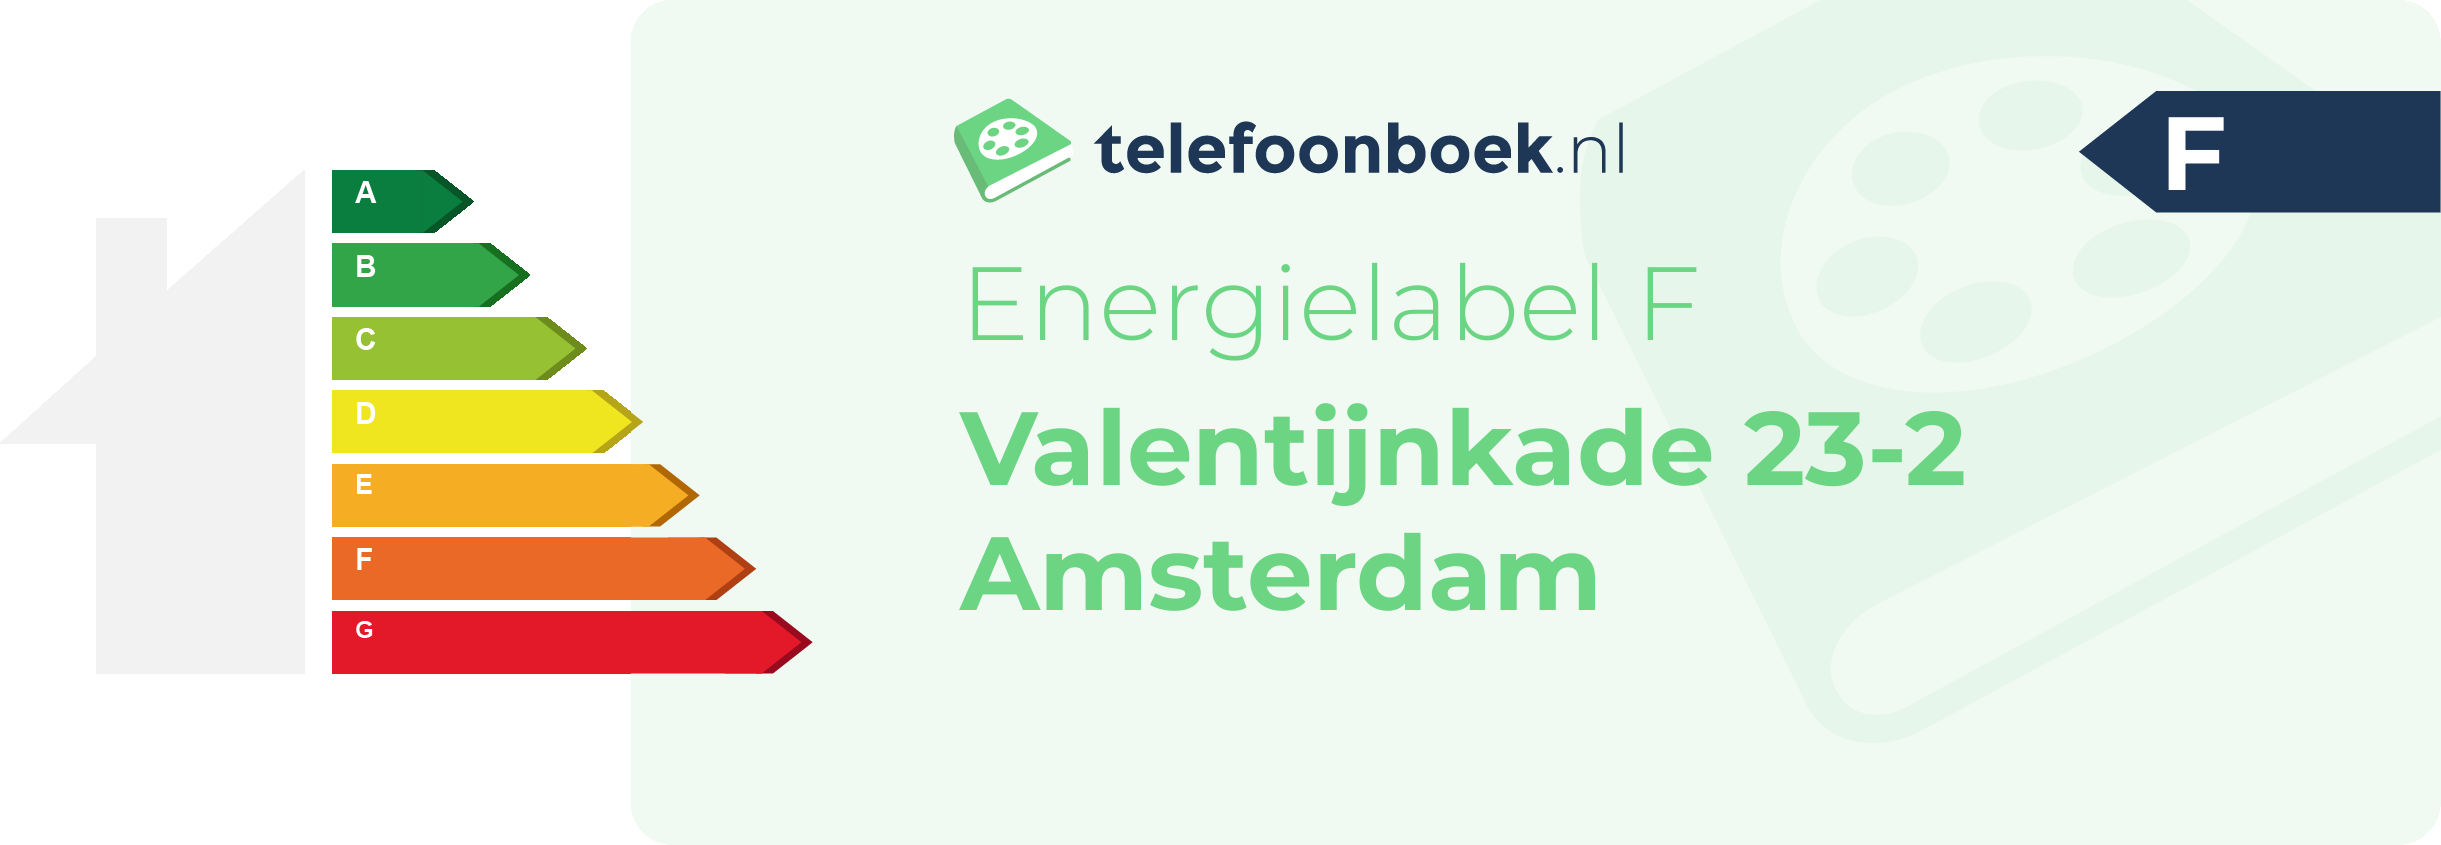 Energielabel Valentijnkade 23-2 Amsterdam